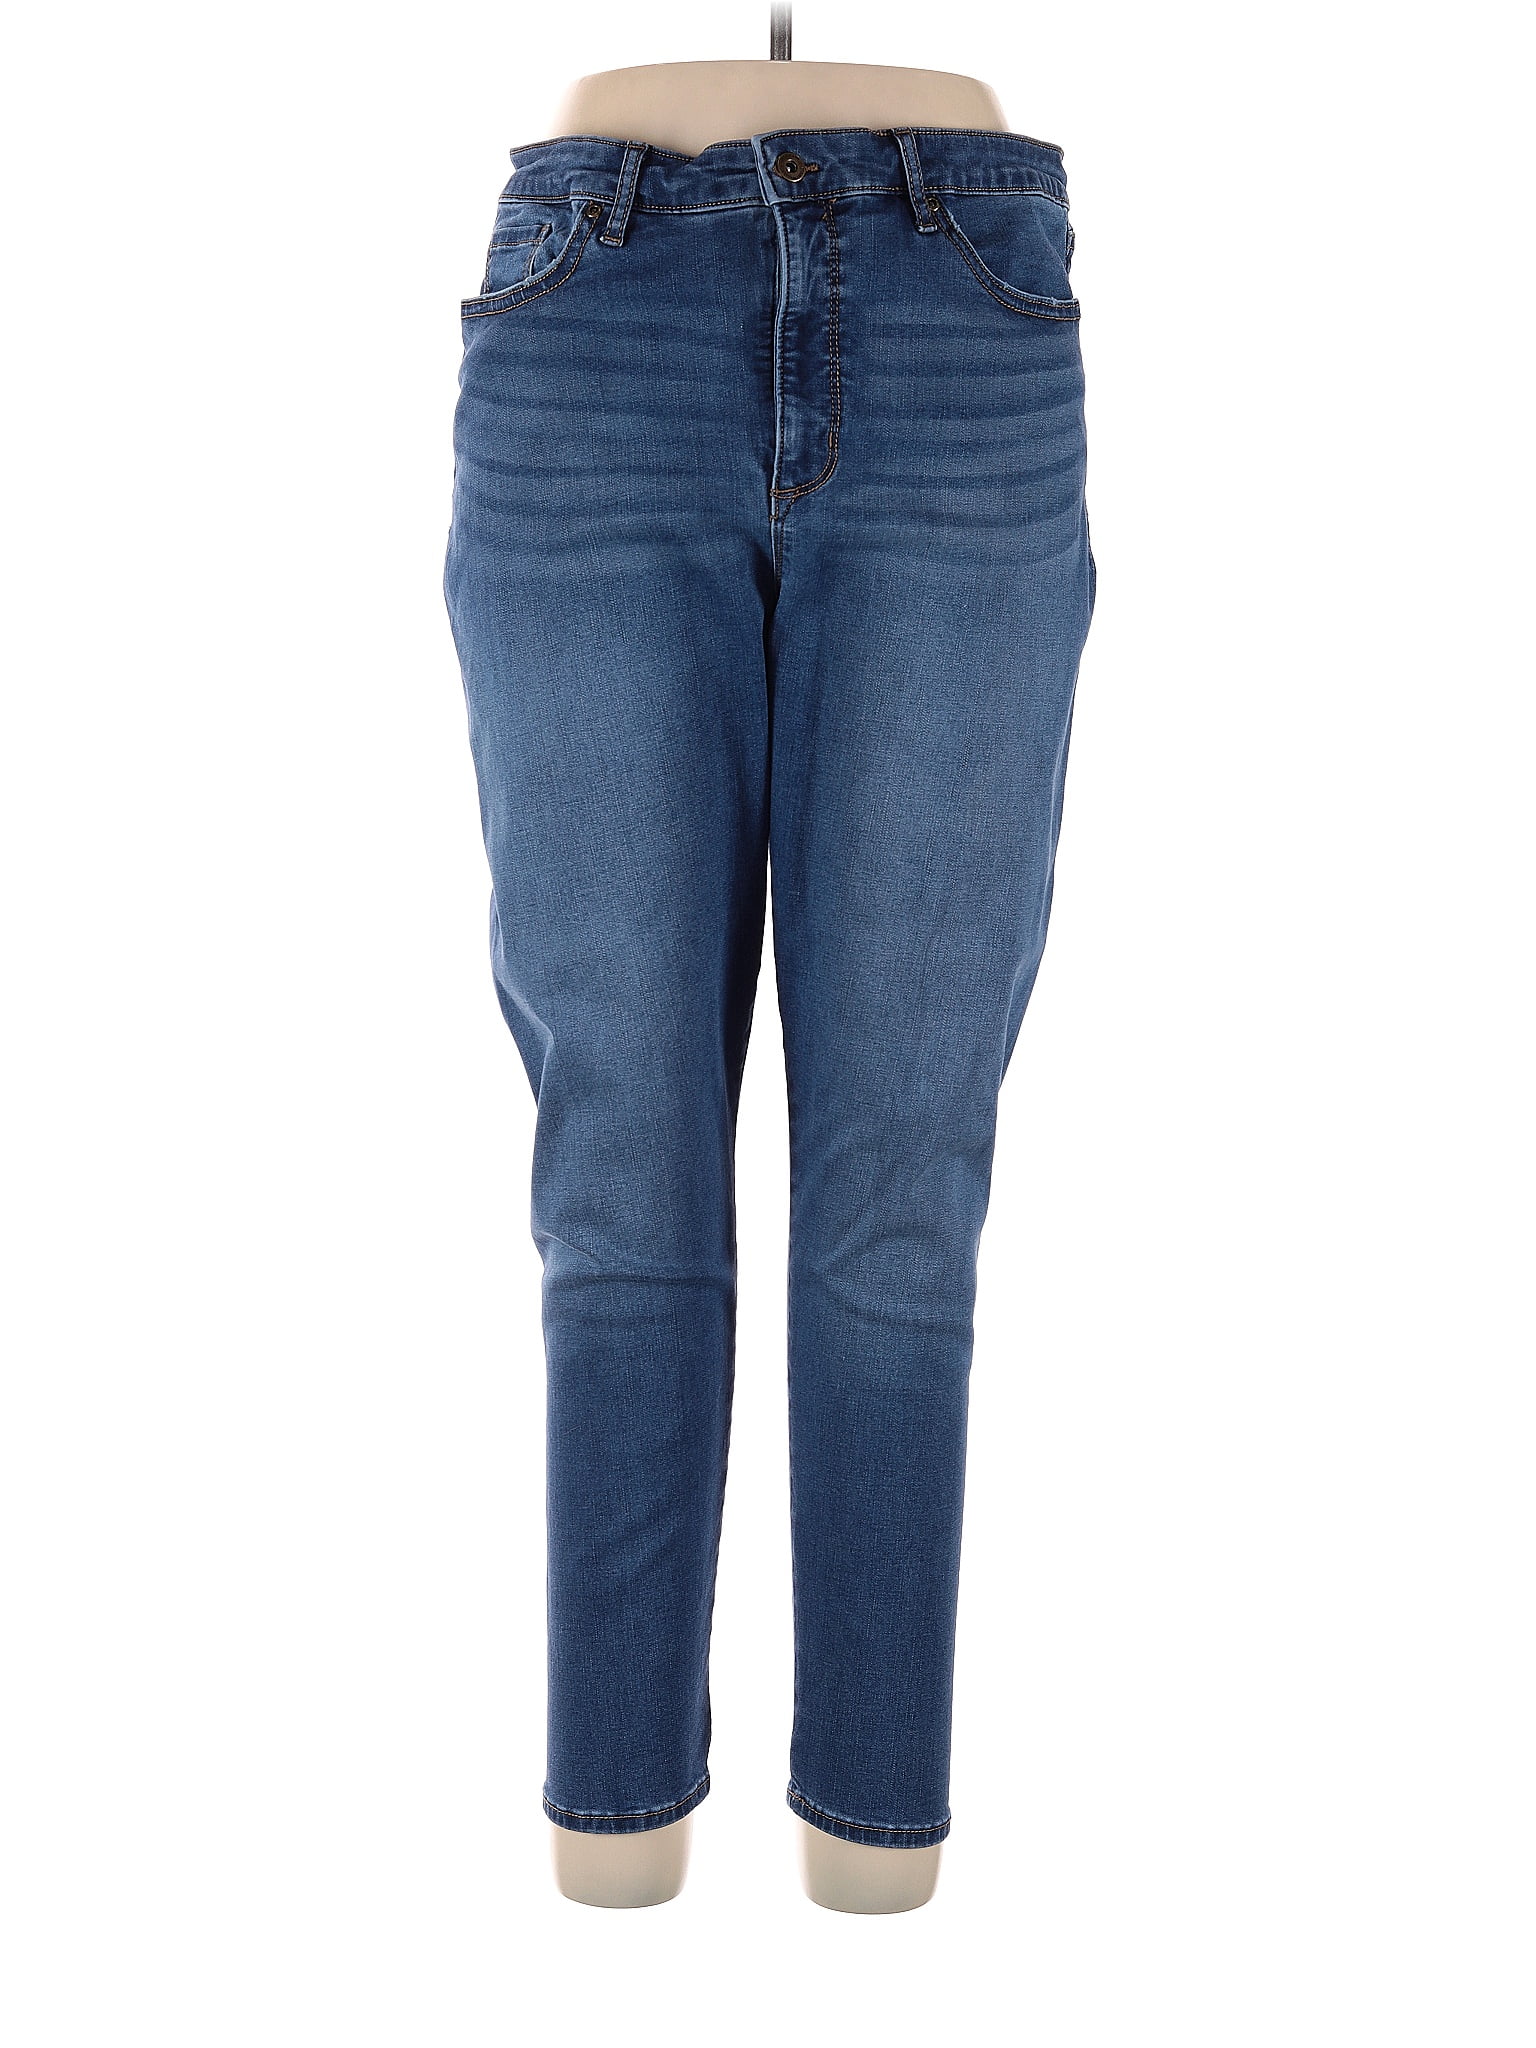 Sofia by Sofia Vergara Solid Blue Jeans Size 14 - 50% off